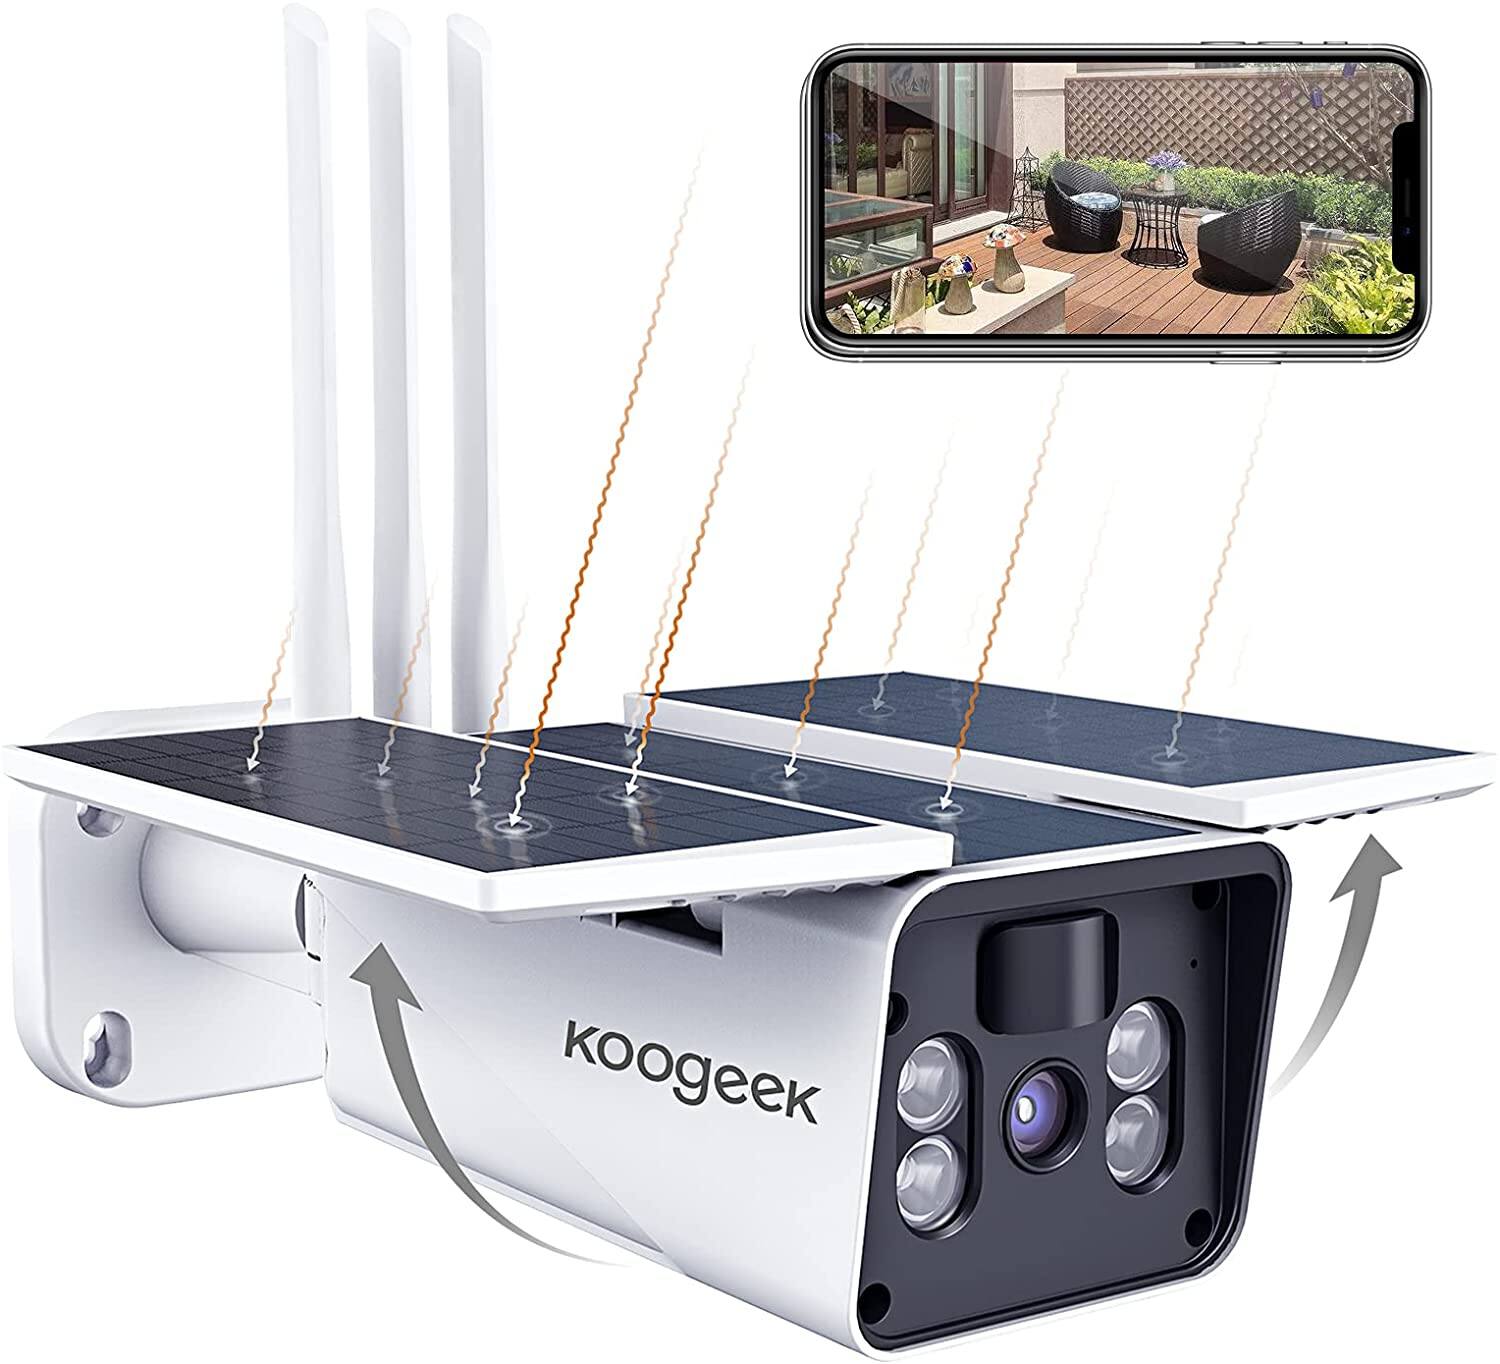 Koogeek 1080p Solar Security Camera w/ Night Vision $68.60 + Free Shipping